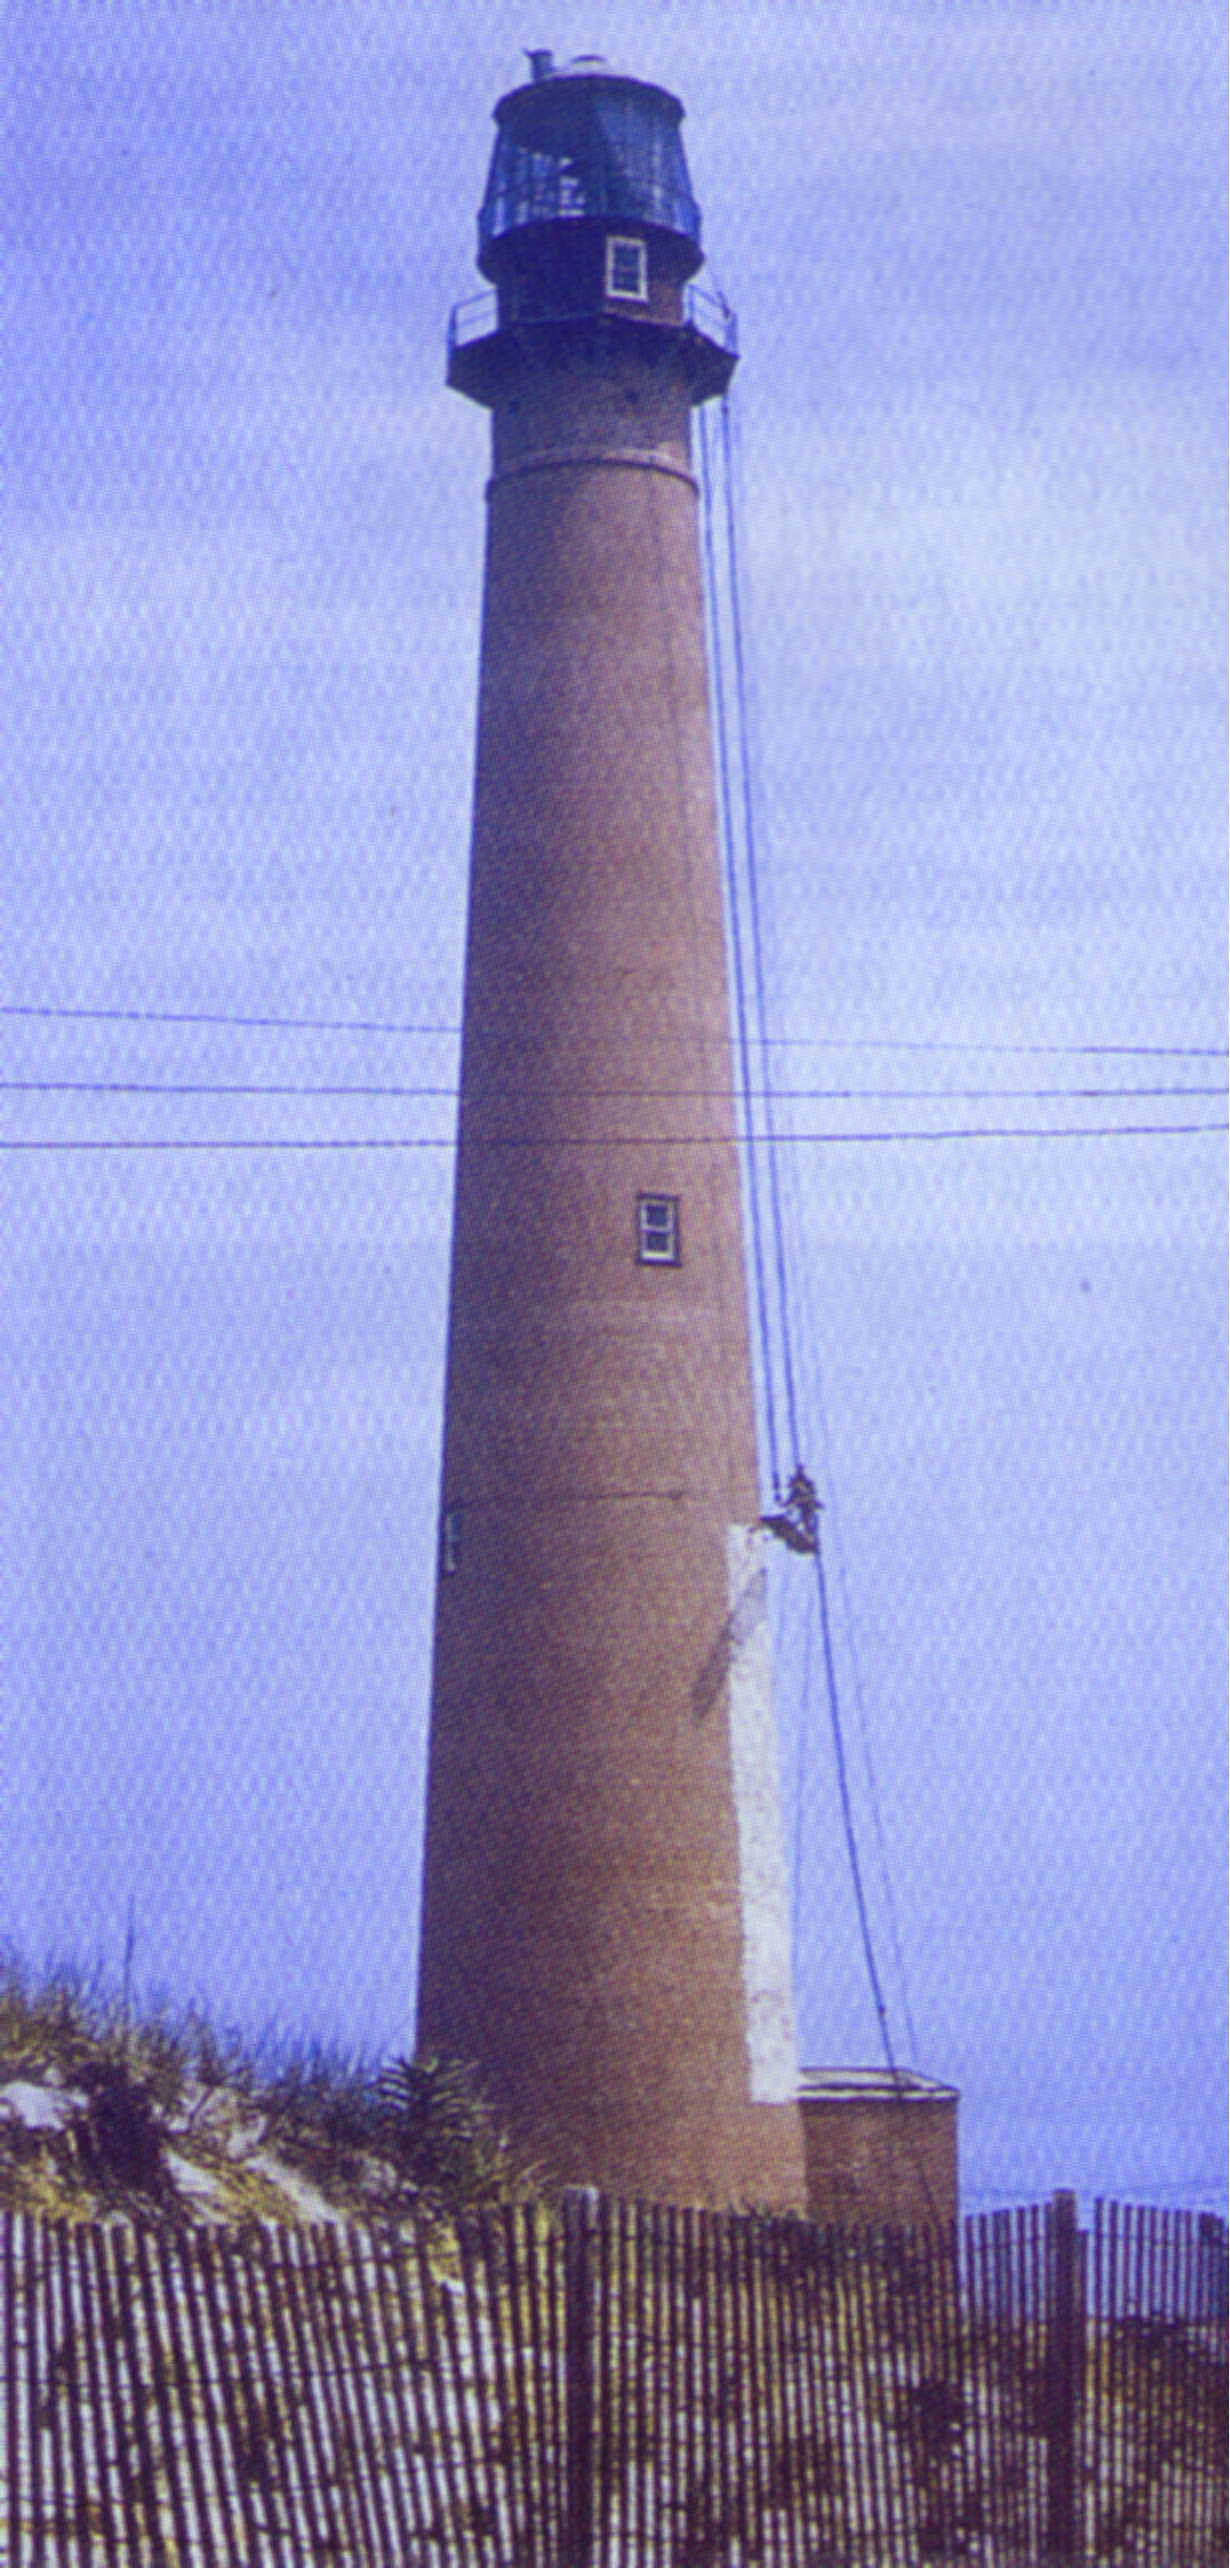 Barnegat Lighthouse from Lighthouse Digest - 1955